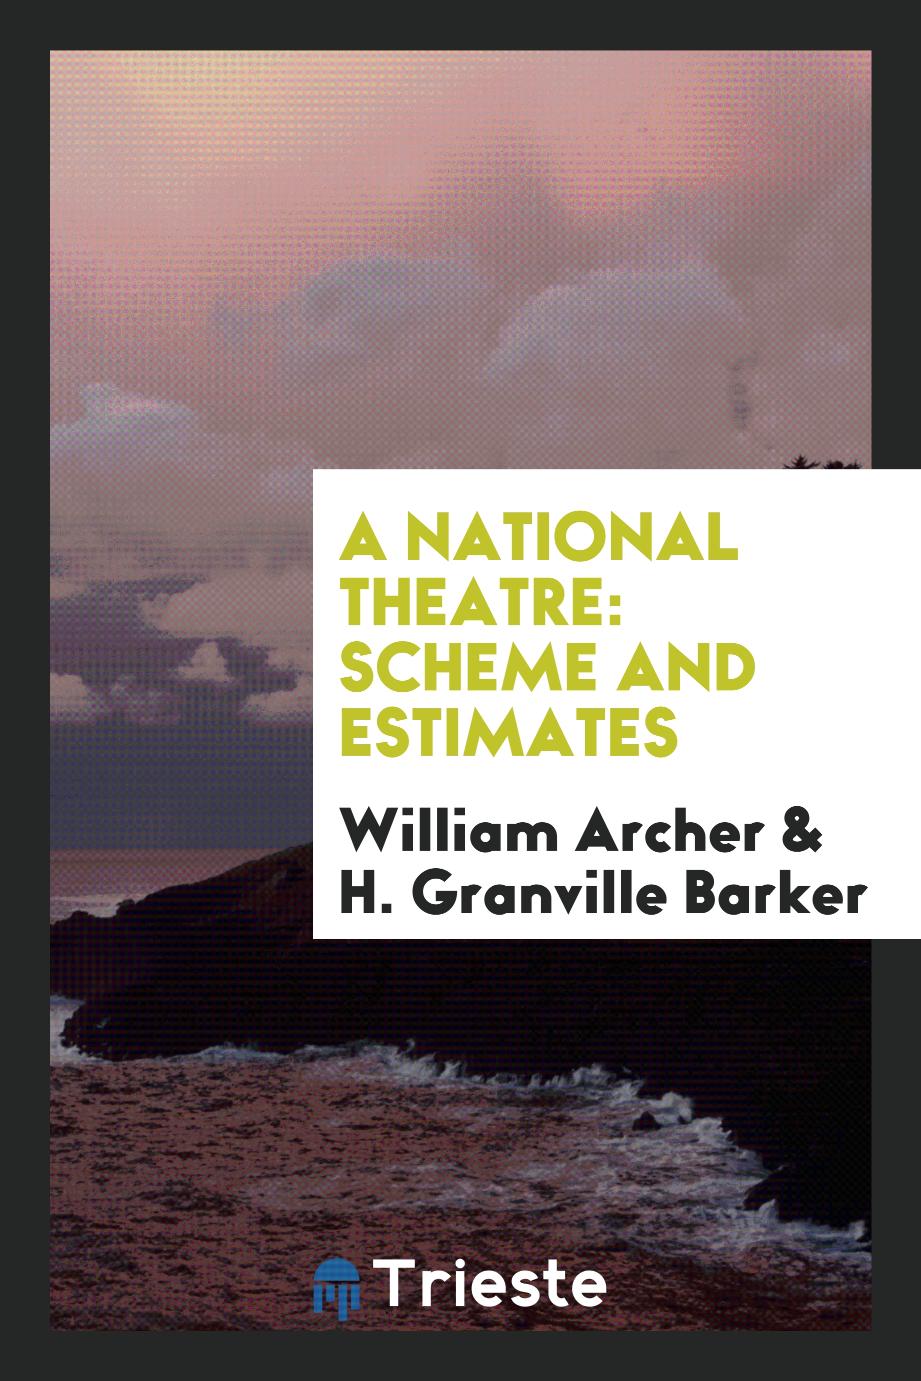 A National Theatre: Scheme and Estimates